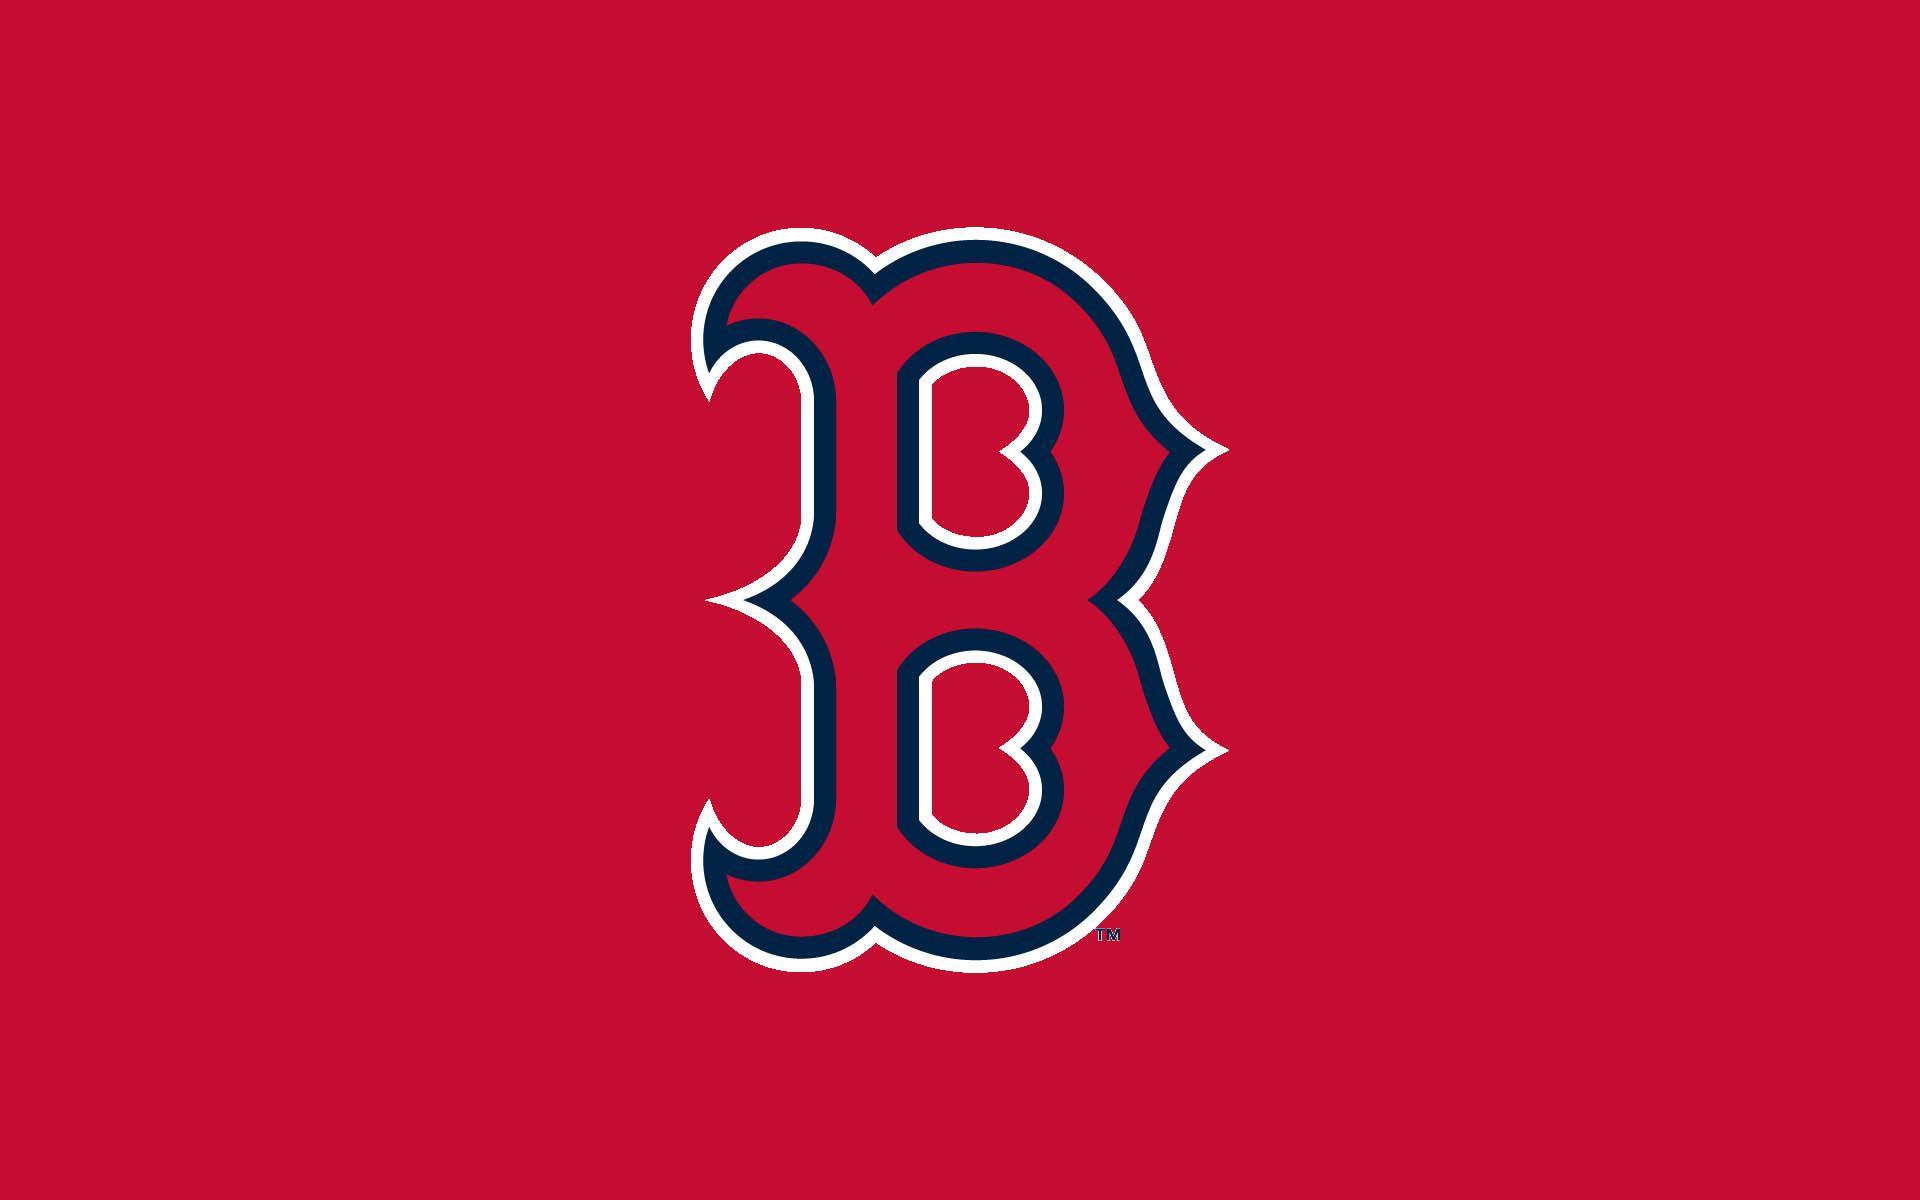 Red Sox Logo Wallpaper